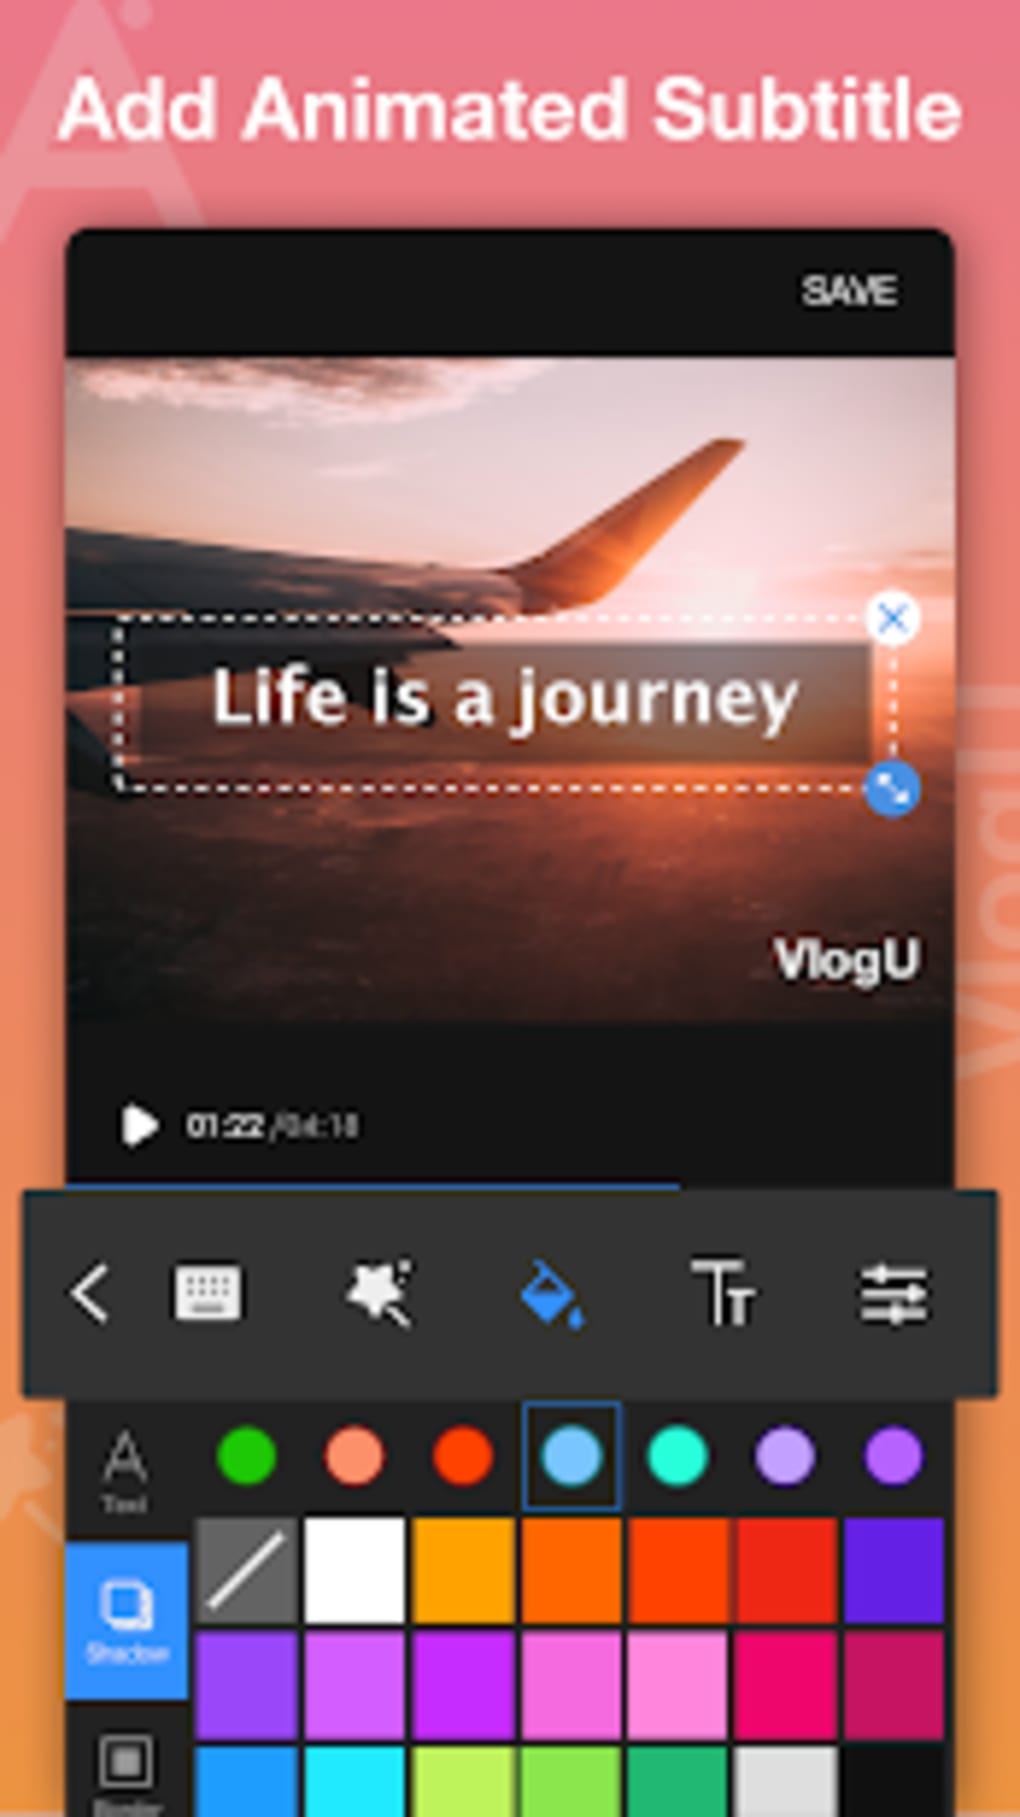 Vlog video editor maker: VlogU - Apps on Google Play